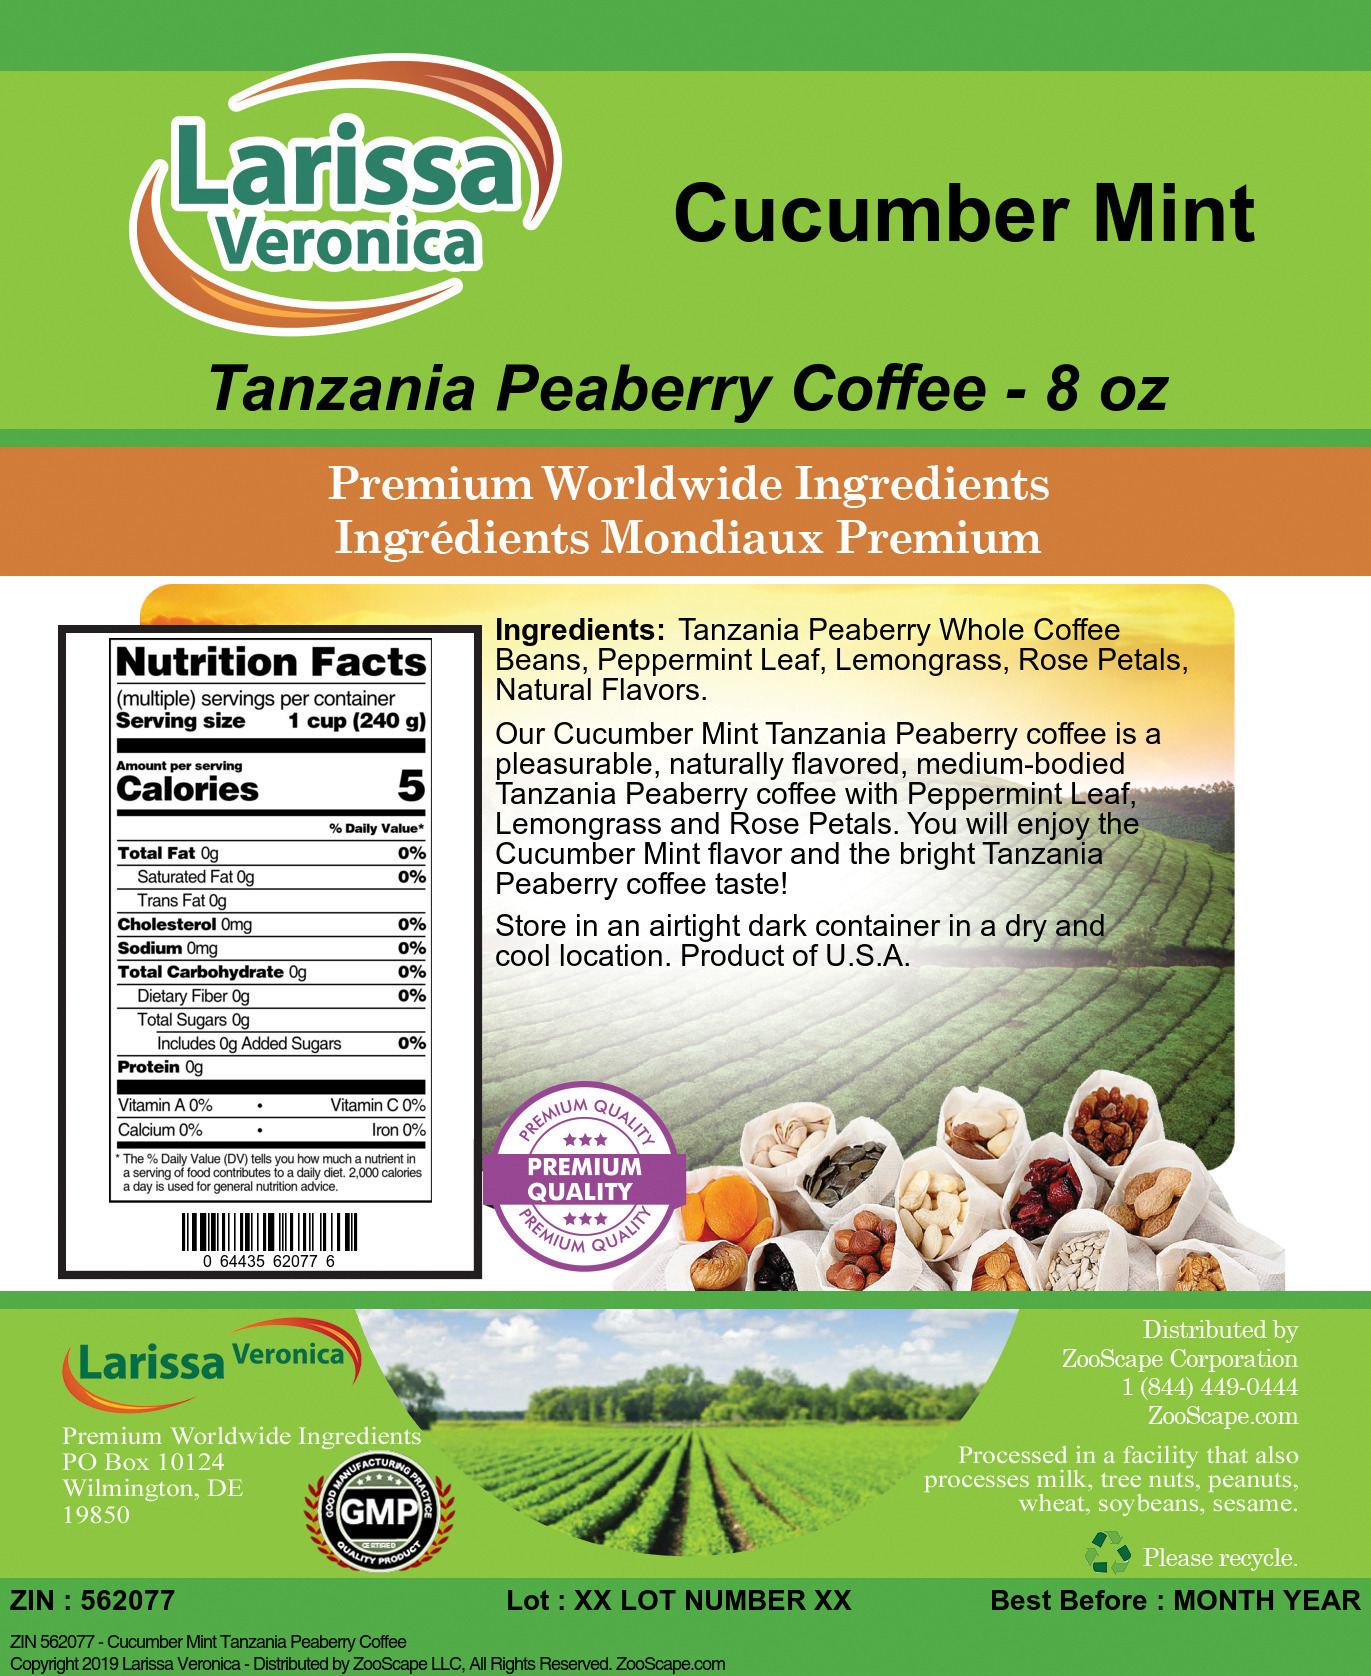 Cucumber Mint Tanzania Peaberry Coffee - Label